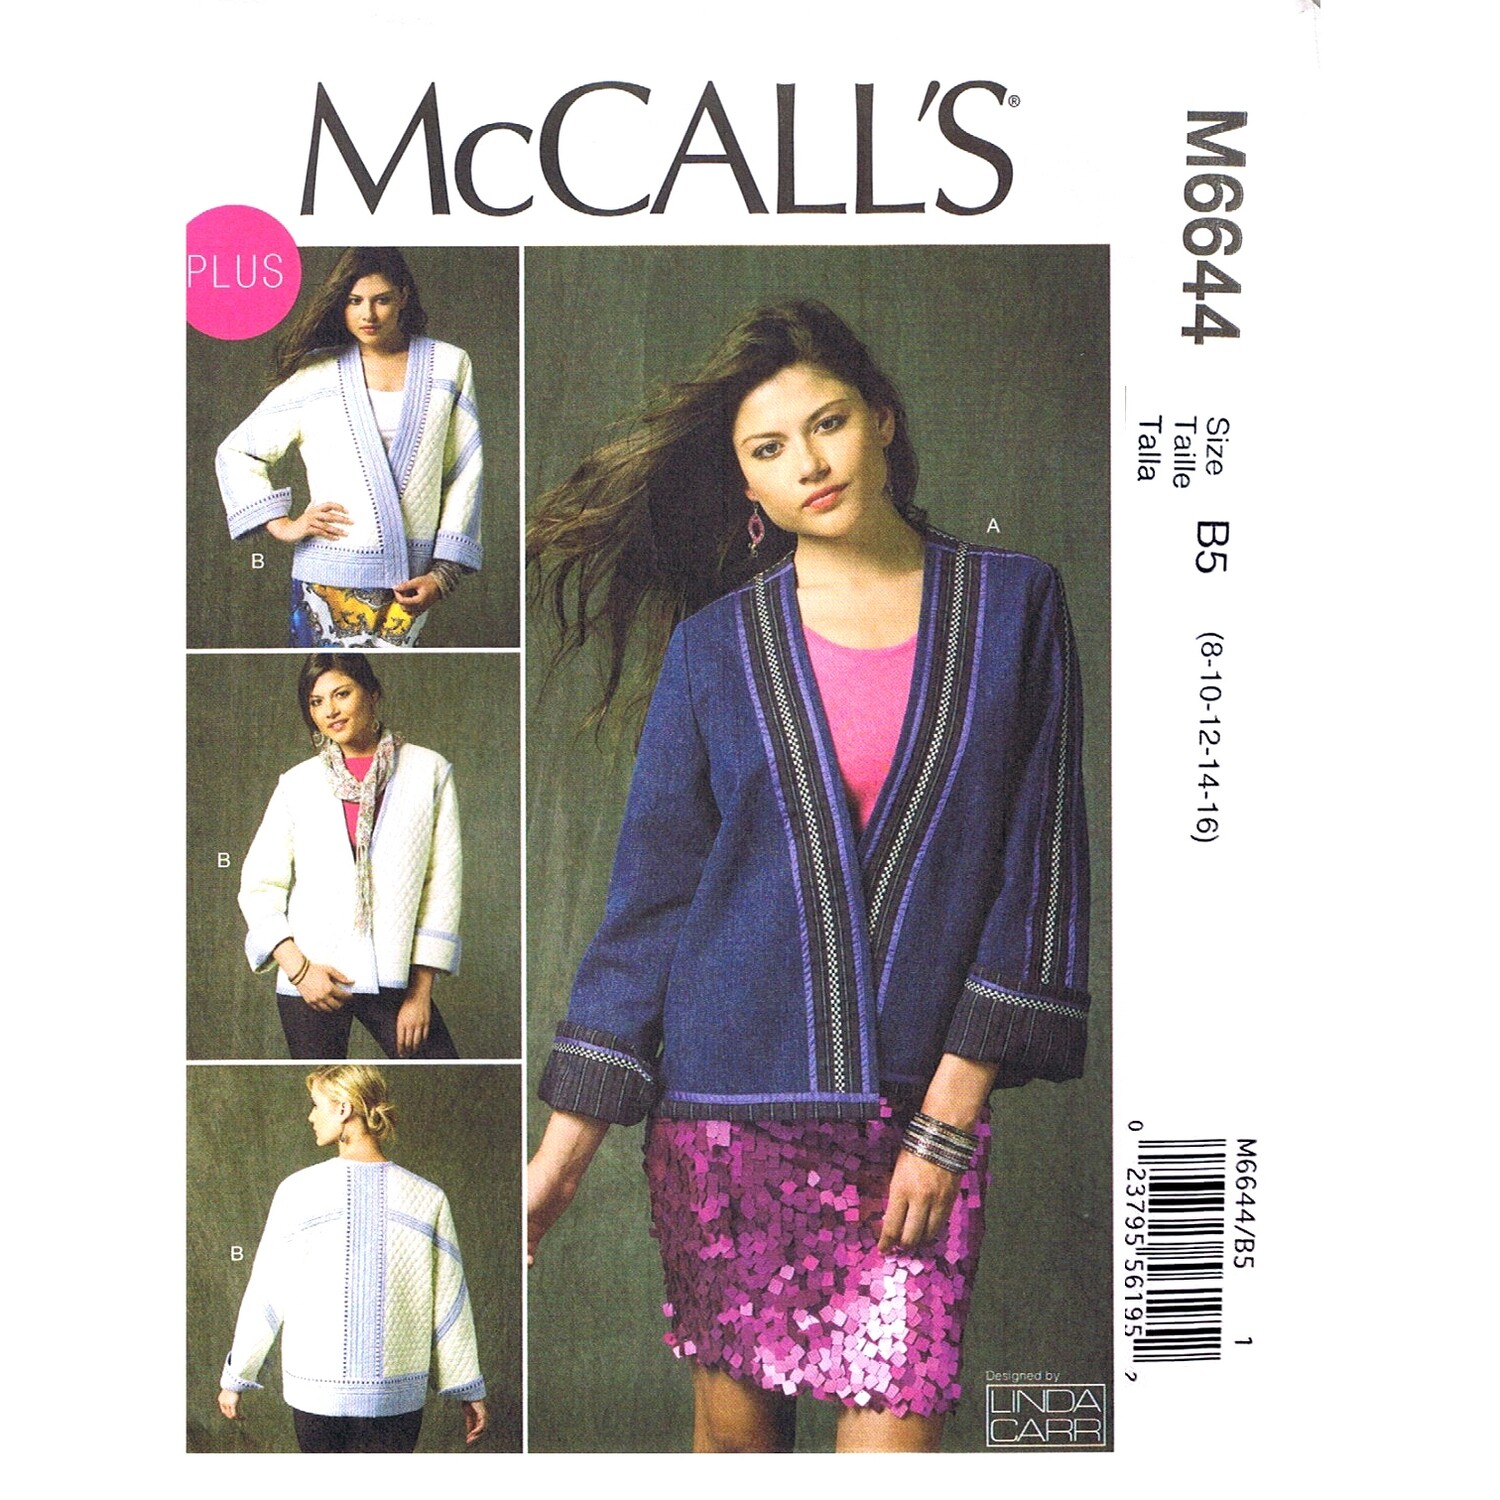 McCall's 6644 pattern